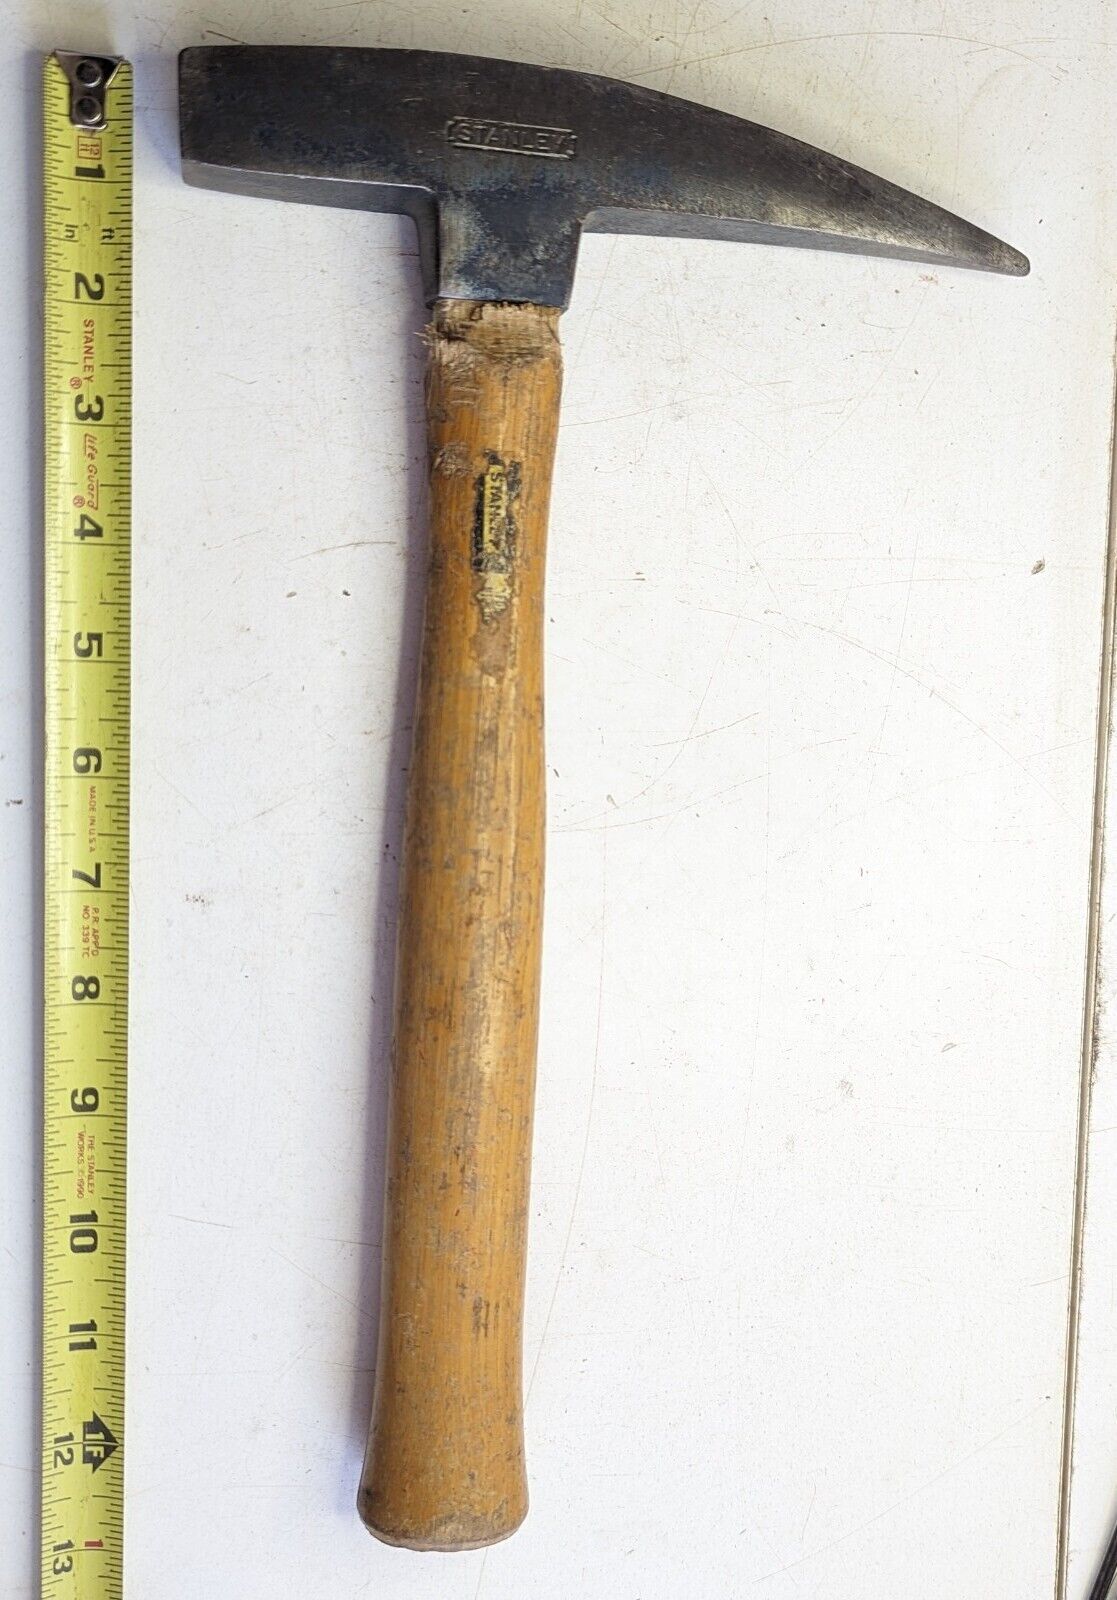 Vintage Stanley Geologist Hammer